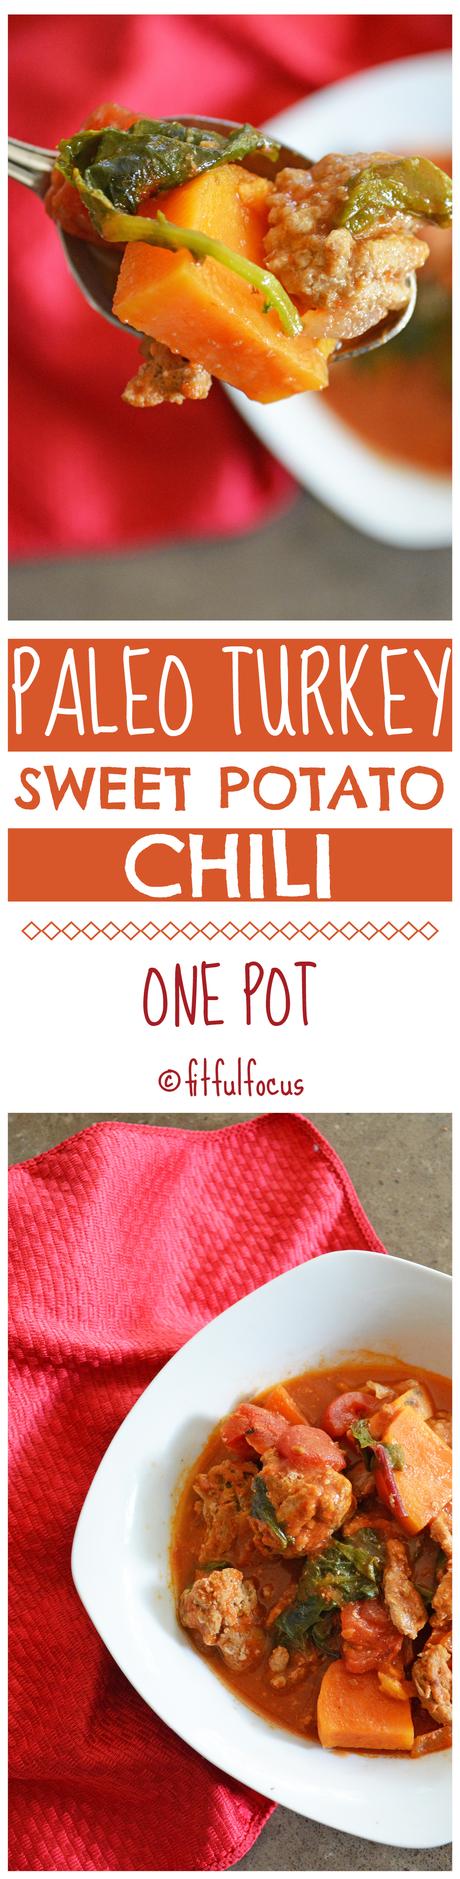 Paleo Turkey Sweet Potato Chili (one pot)